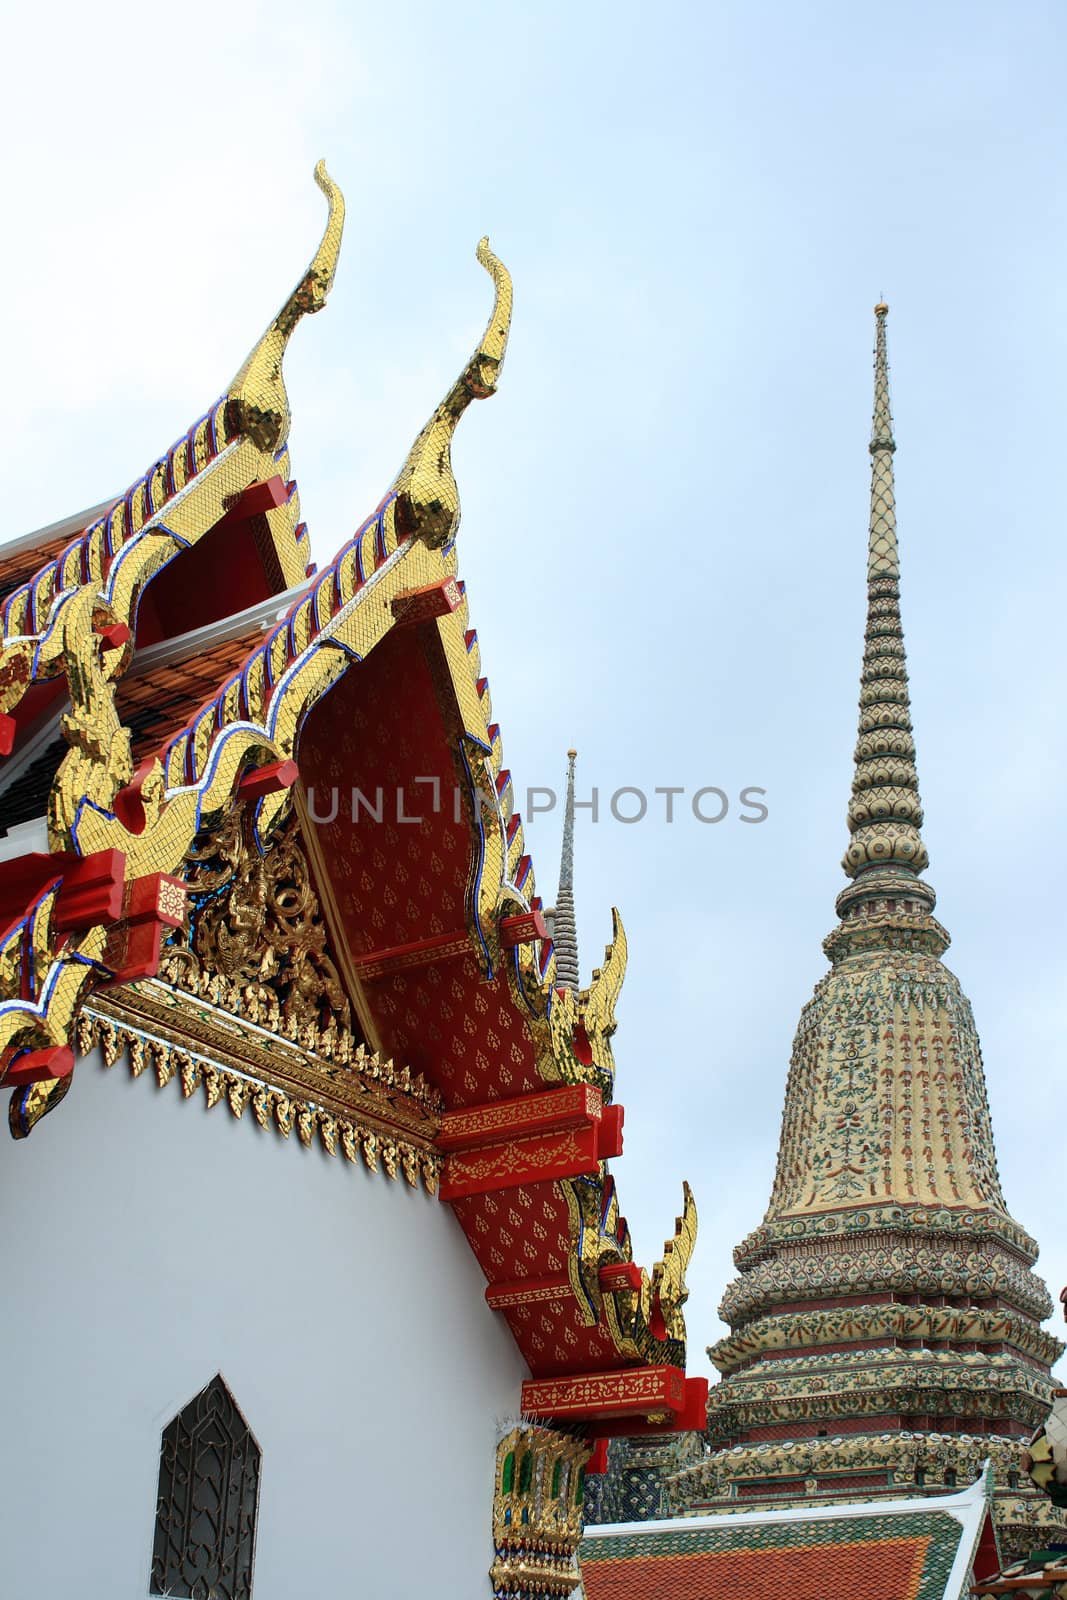 Pagoda in Wat Pho in Bangkok, Thailand